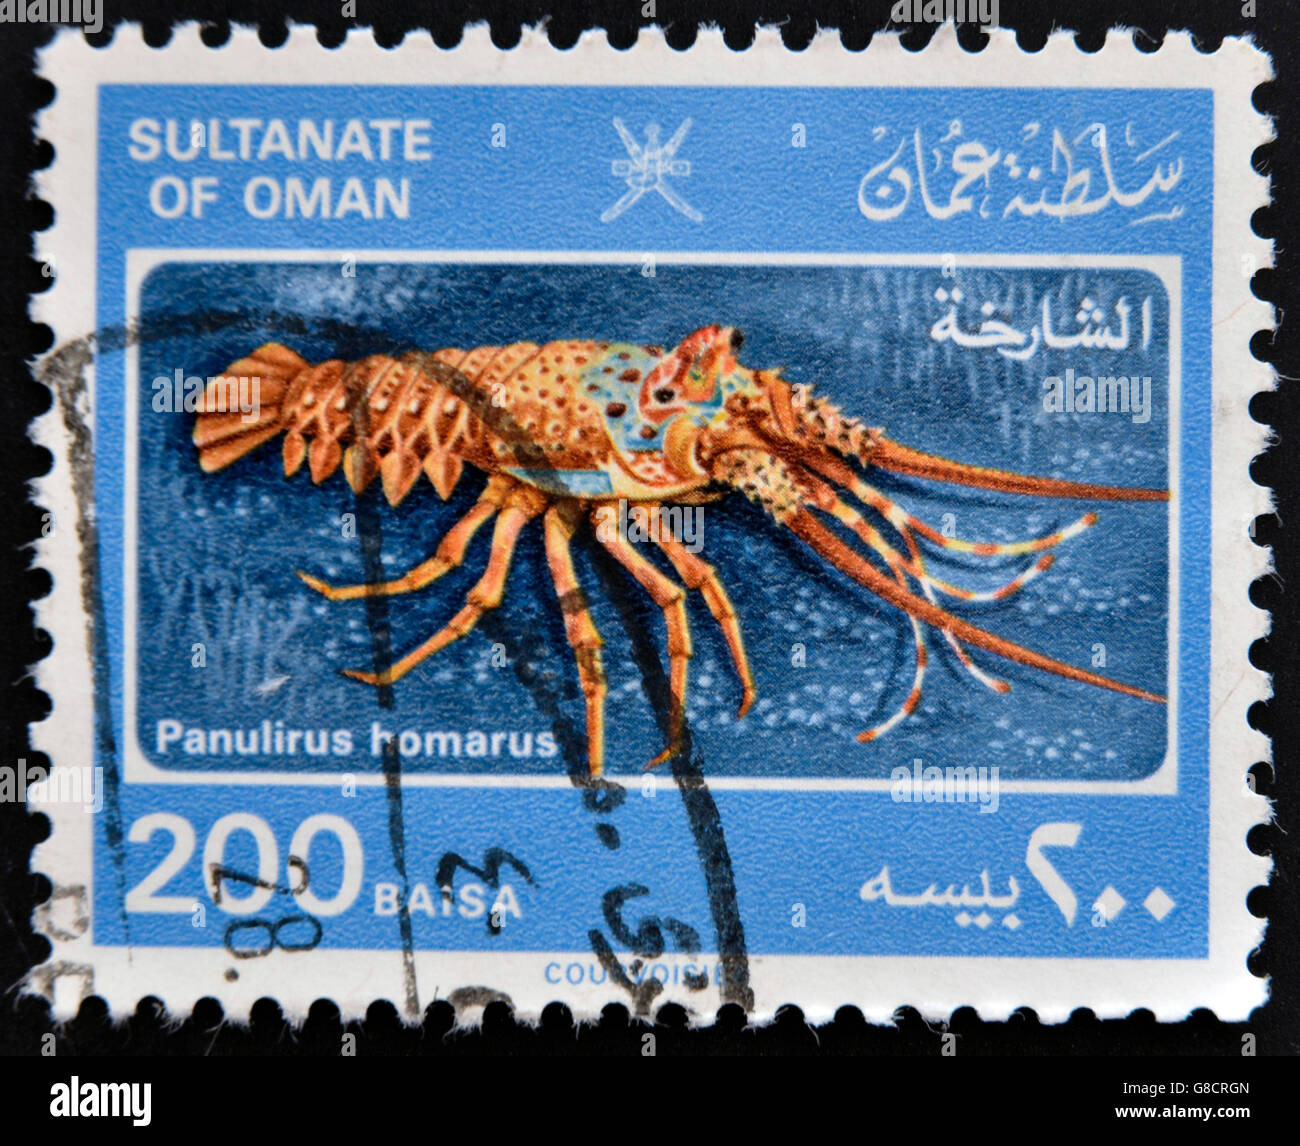 SULTANATE OF OMAN - CIRCA 1980: A stamp printed in Oman shows a  panulirus homarus, circa 1980 Stock Photo